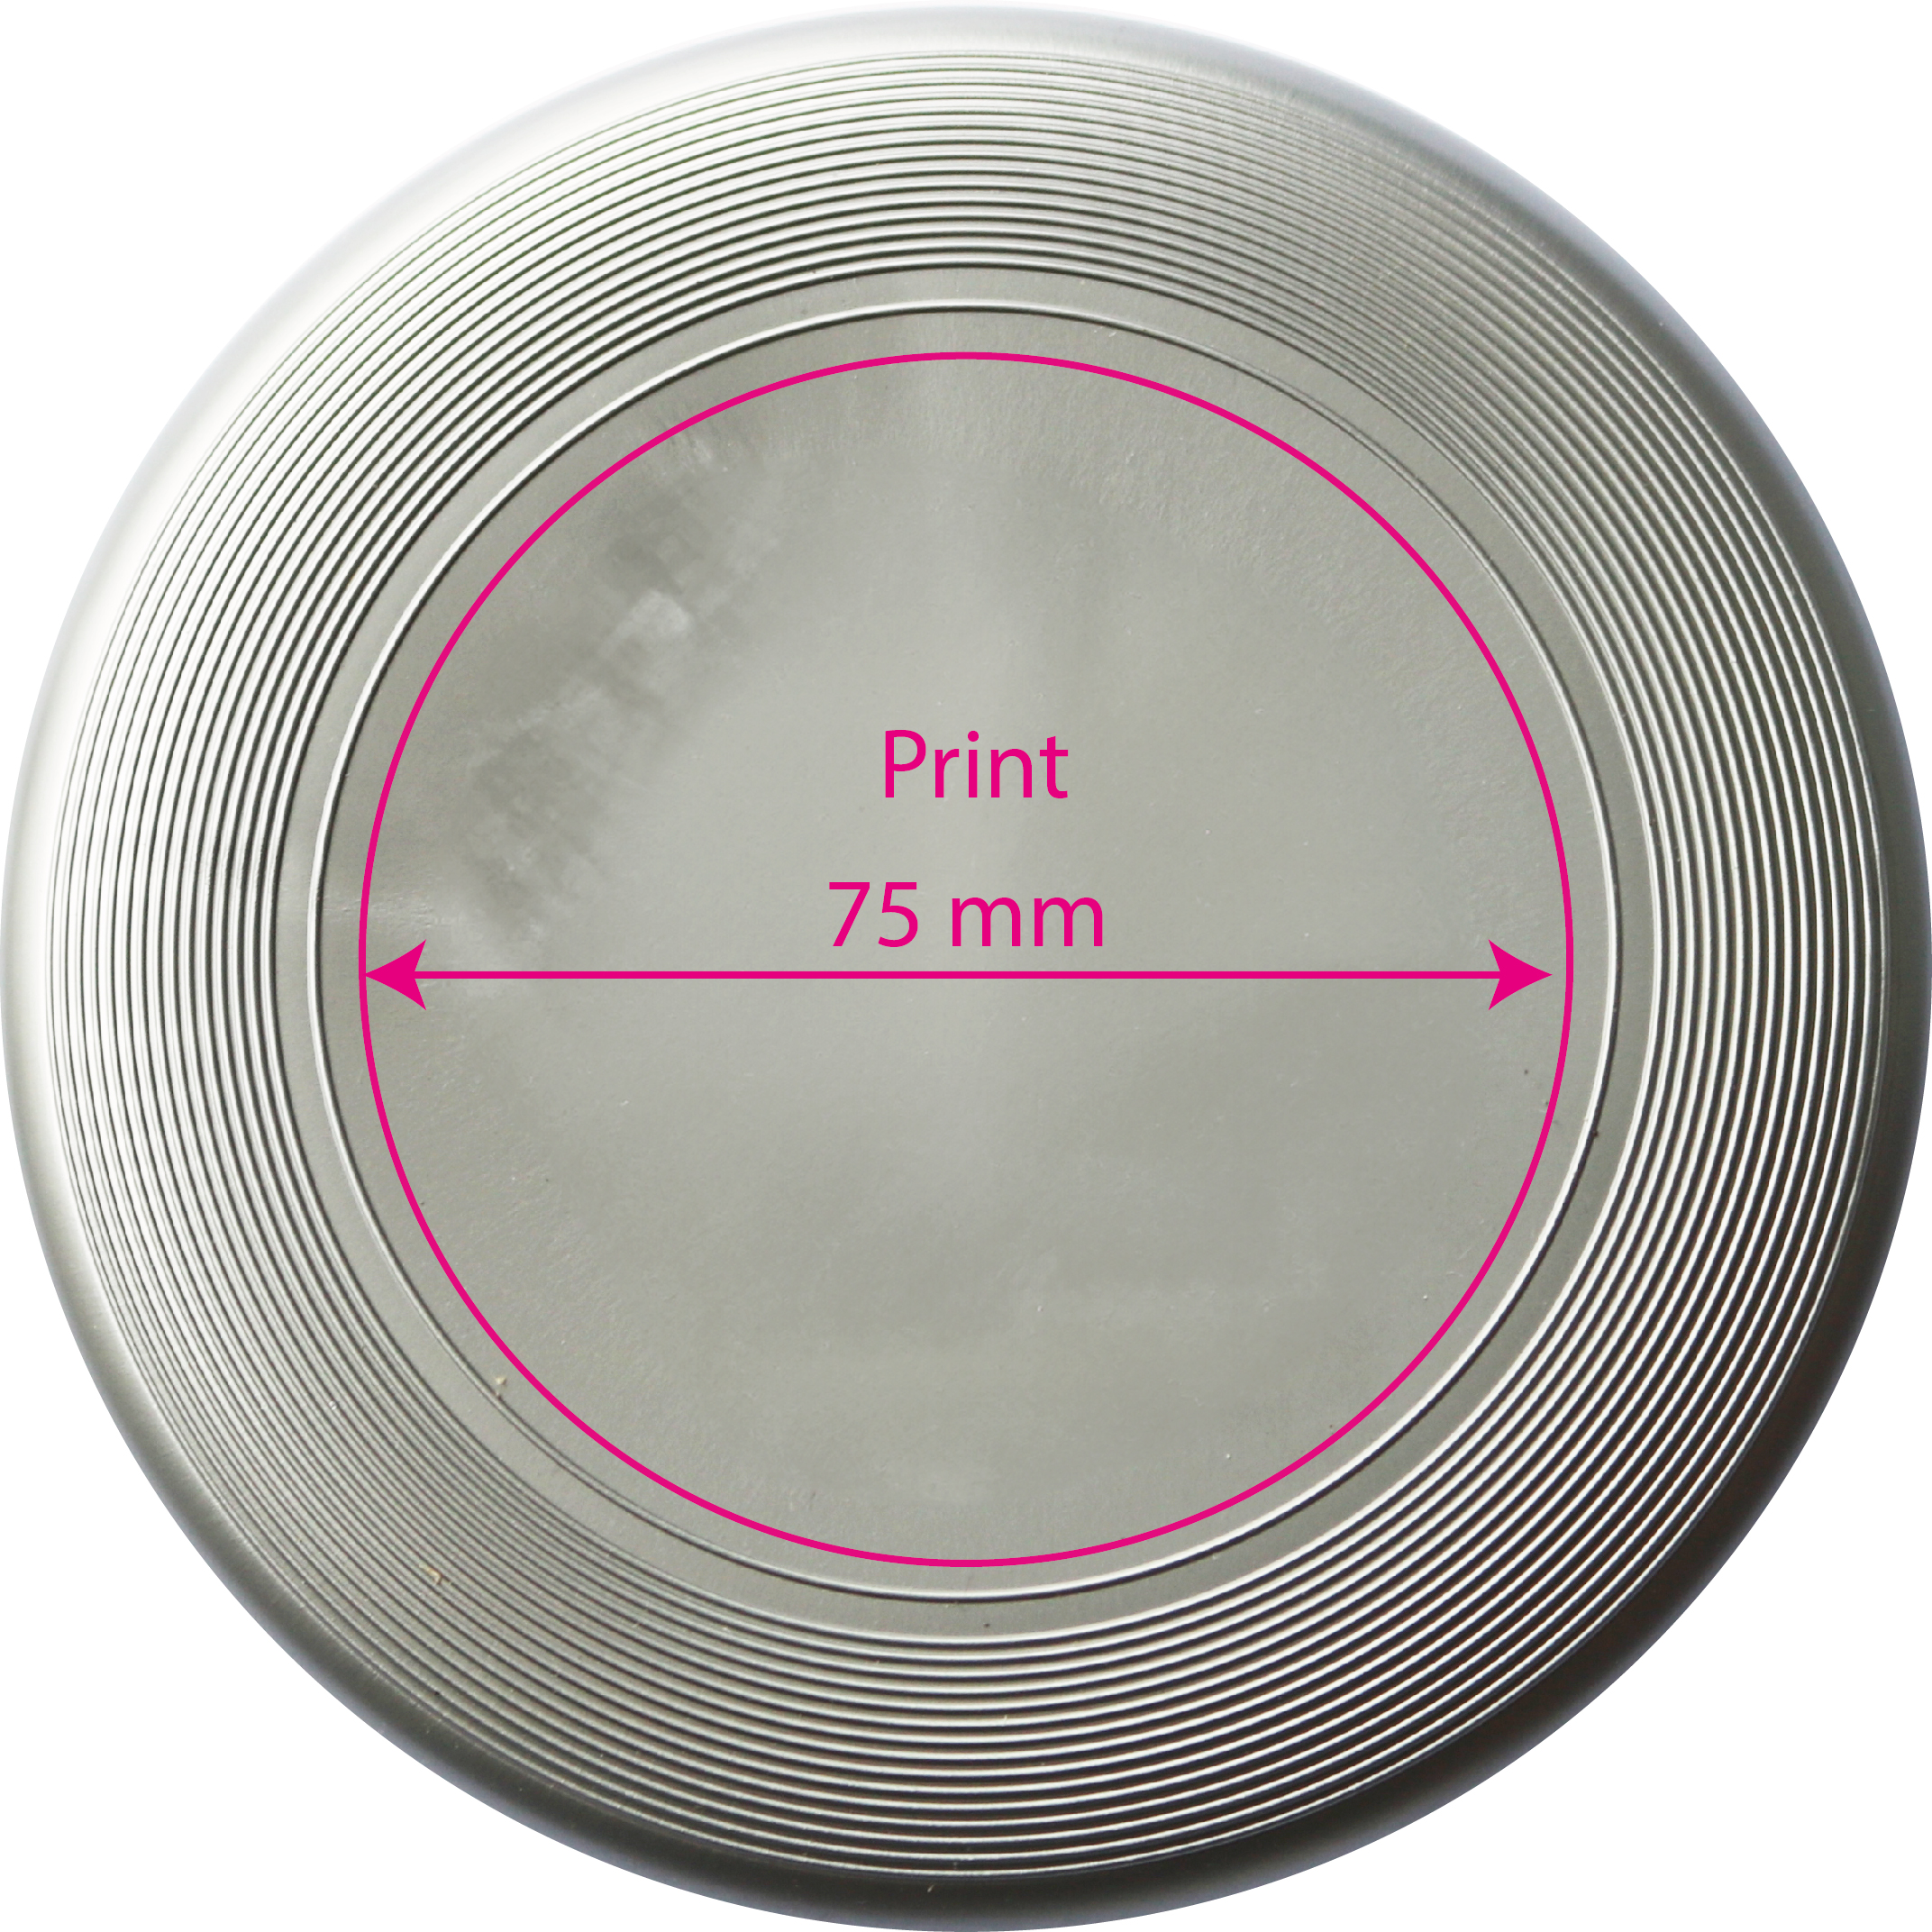 Individuelle eurodisc® 25g Mini Frisbee silber mit eigenem Logo